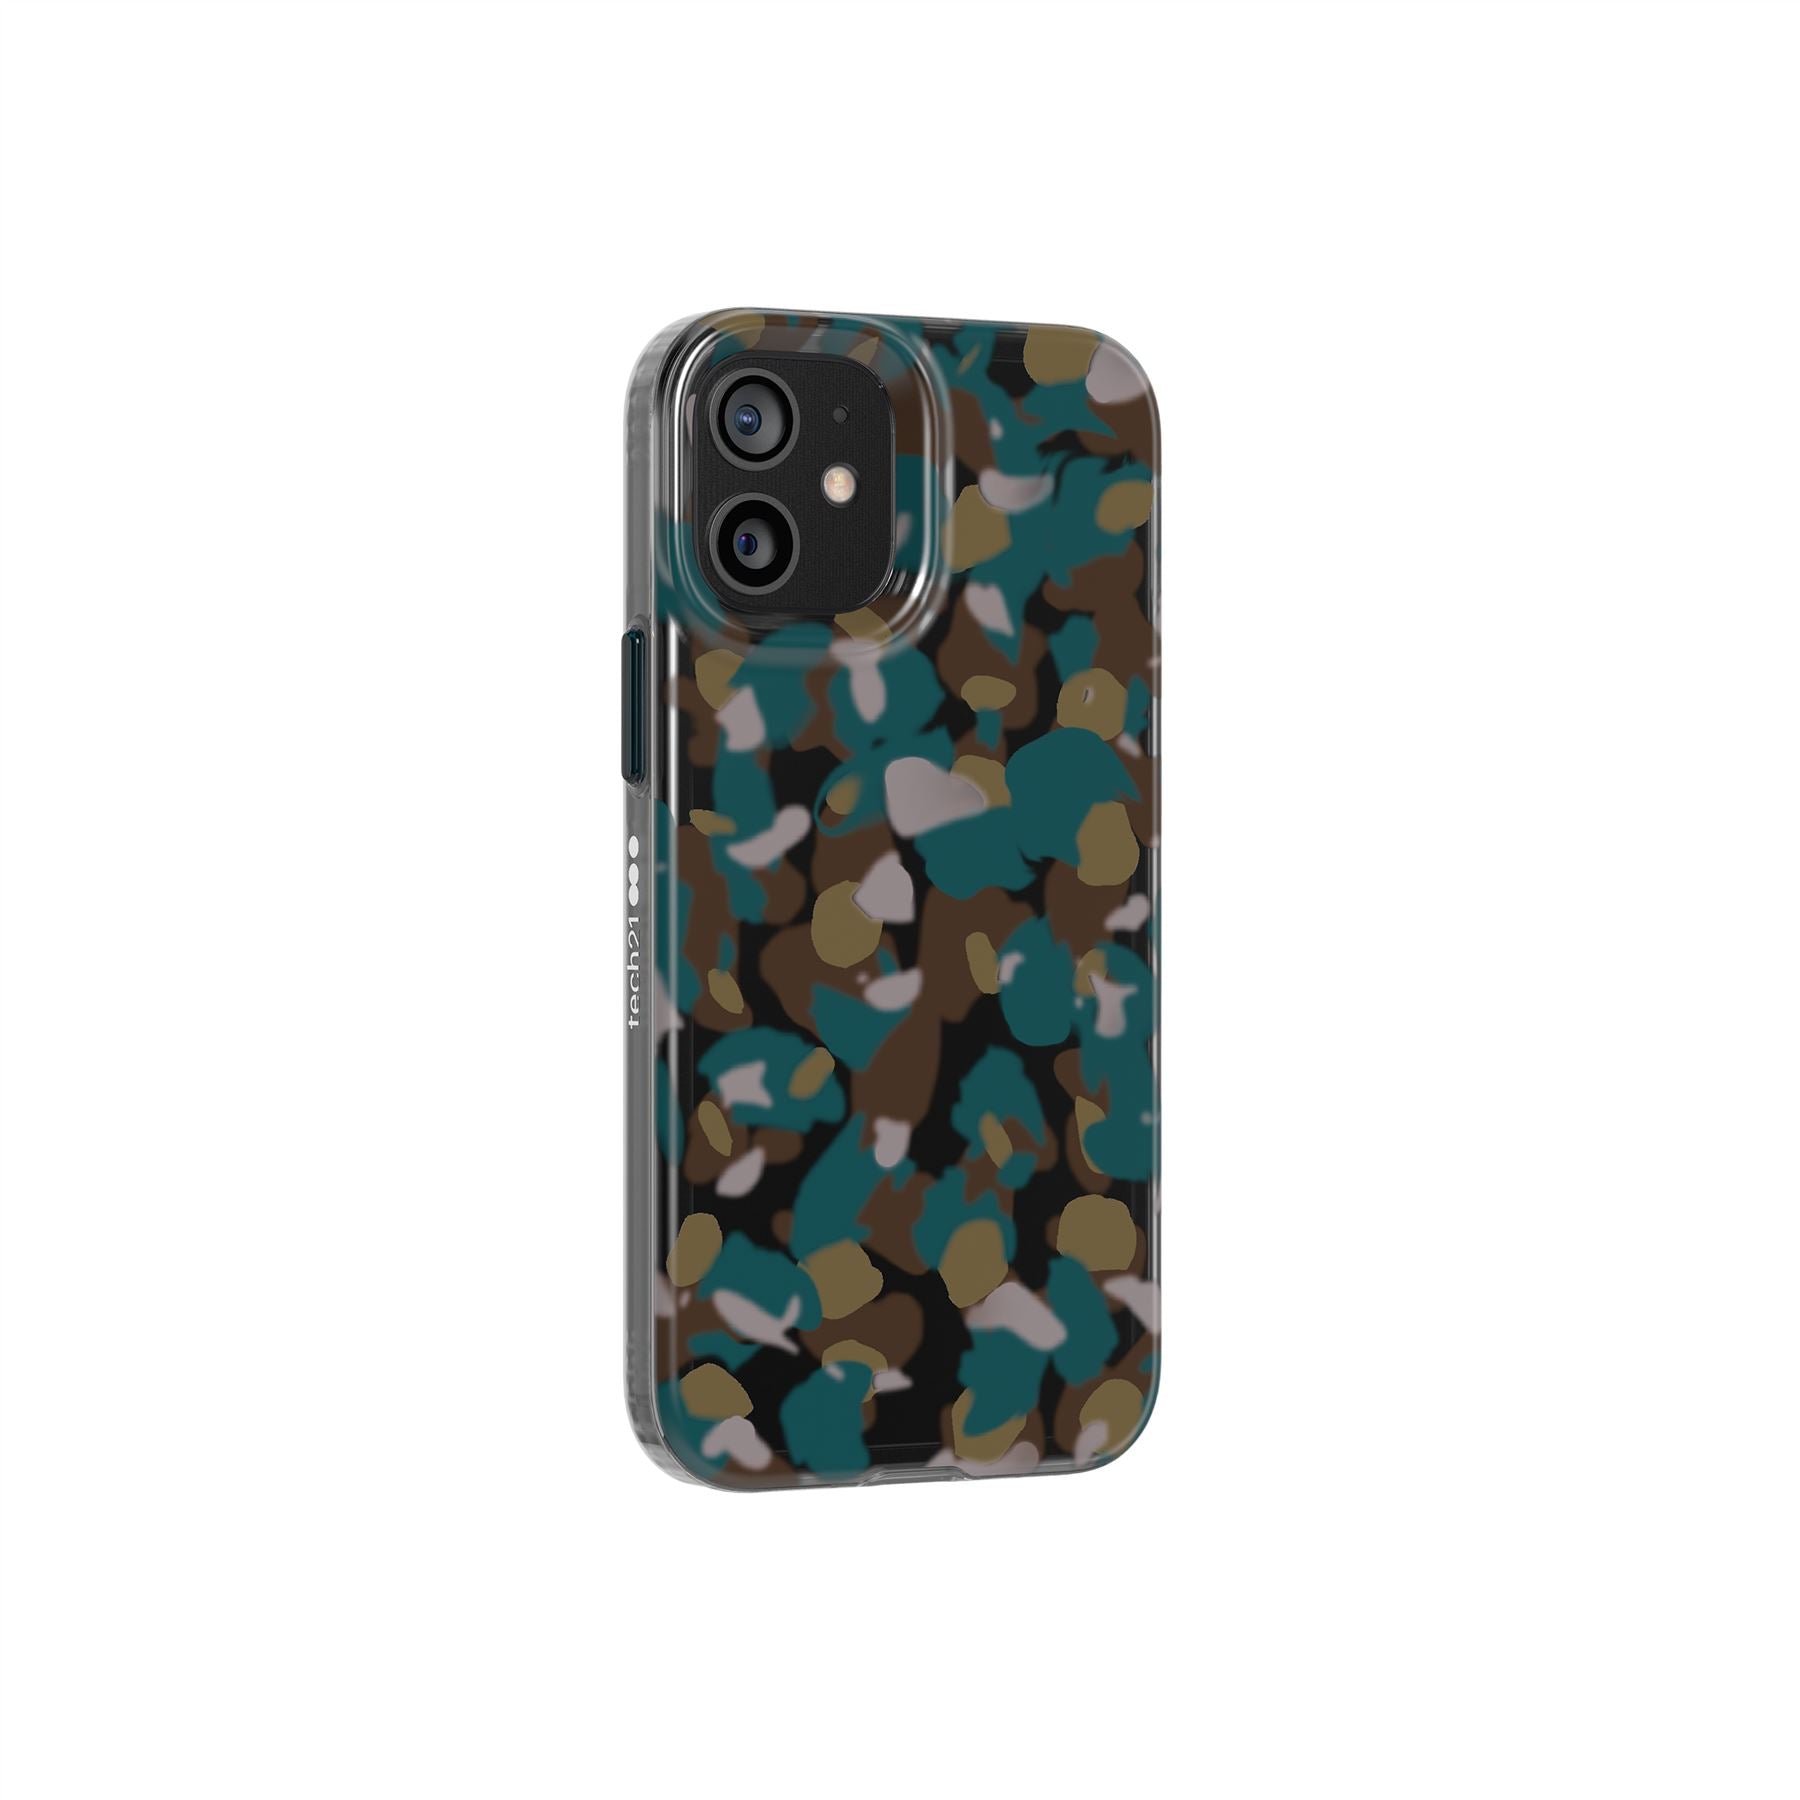 Evo Art - Apple iPhone 12 mini Case - Pine Green